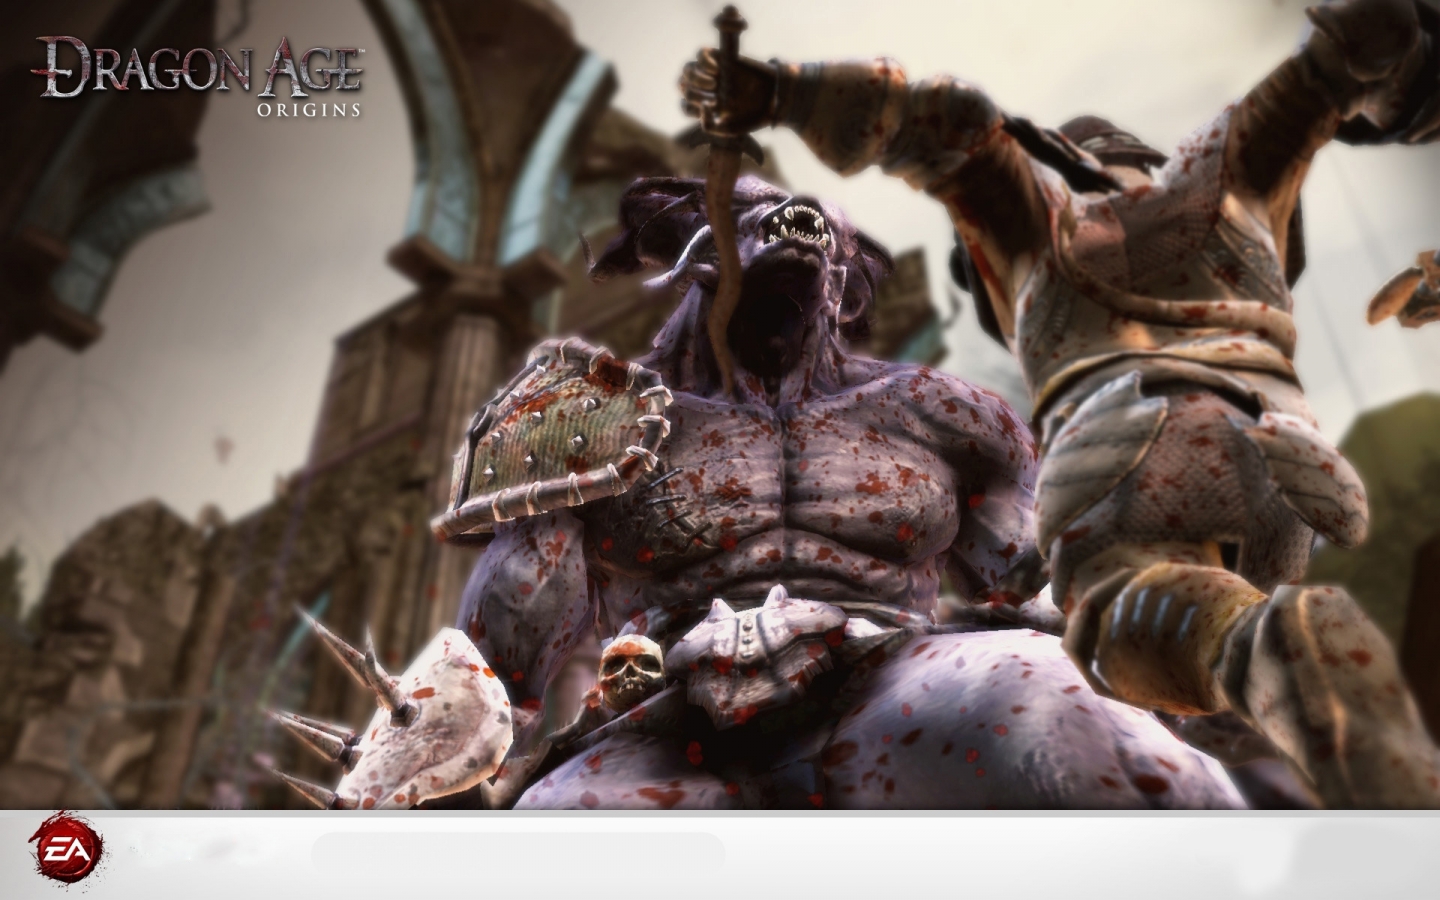 Dragon Age Origins for 1440 x 900 widescreen resolution